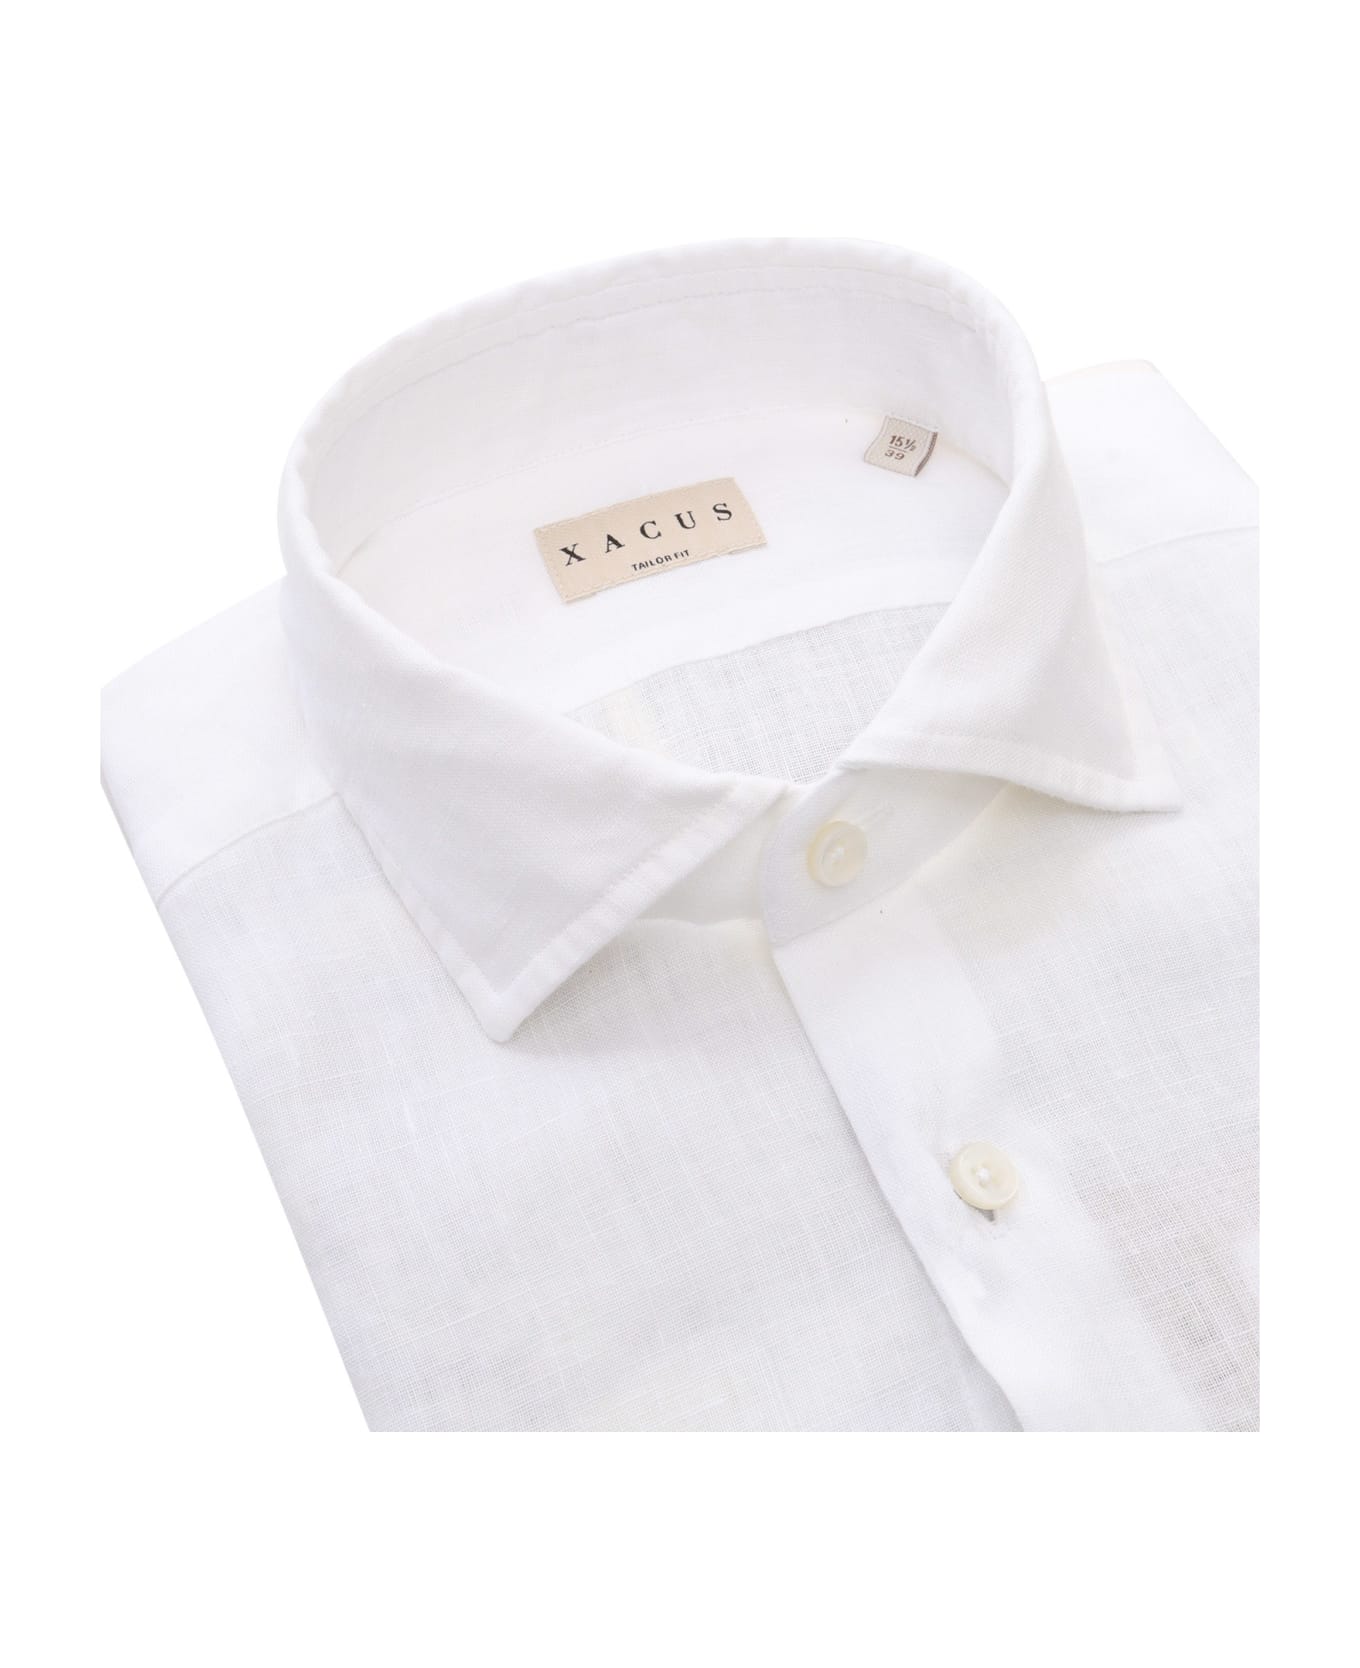 Xacus White Linen Shirt - WHITE